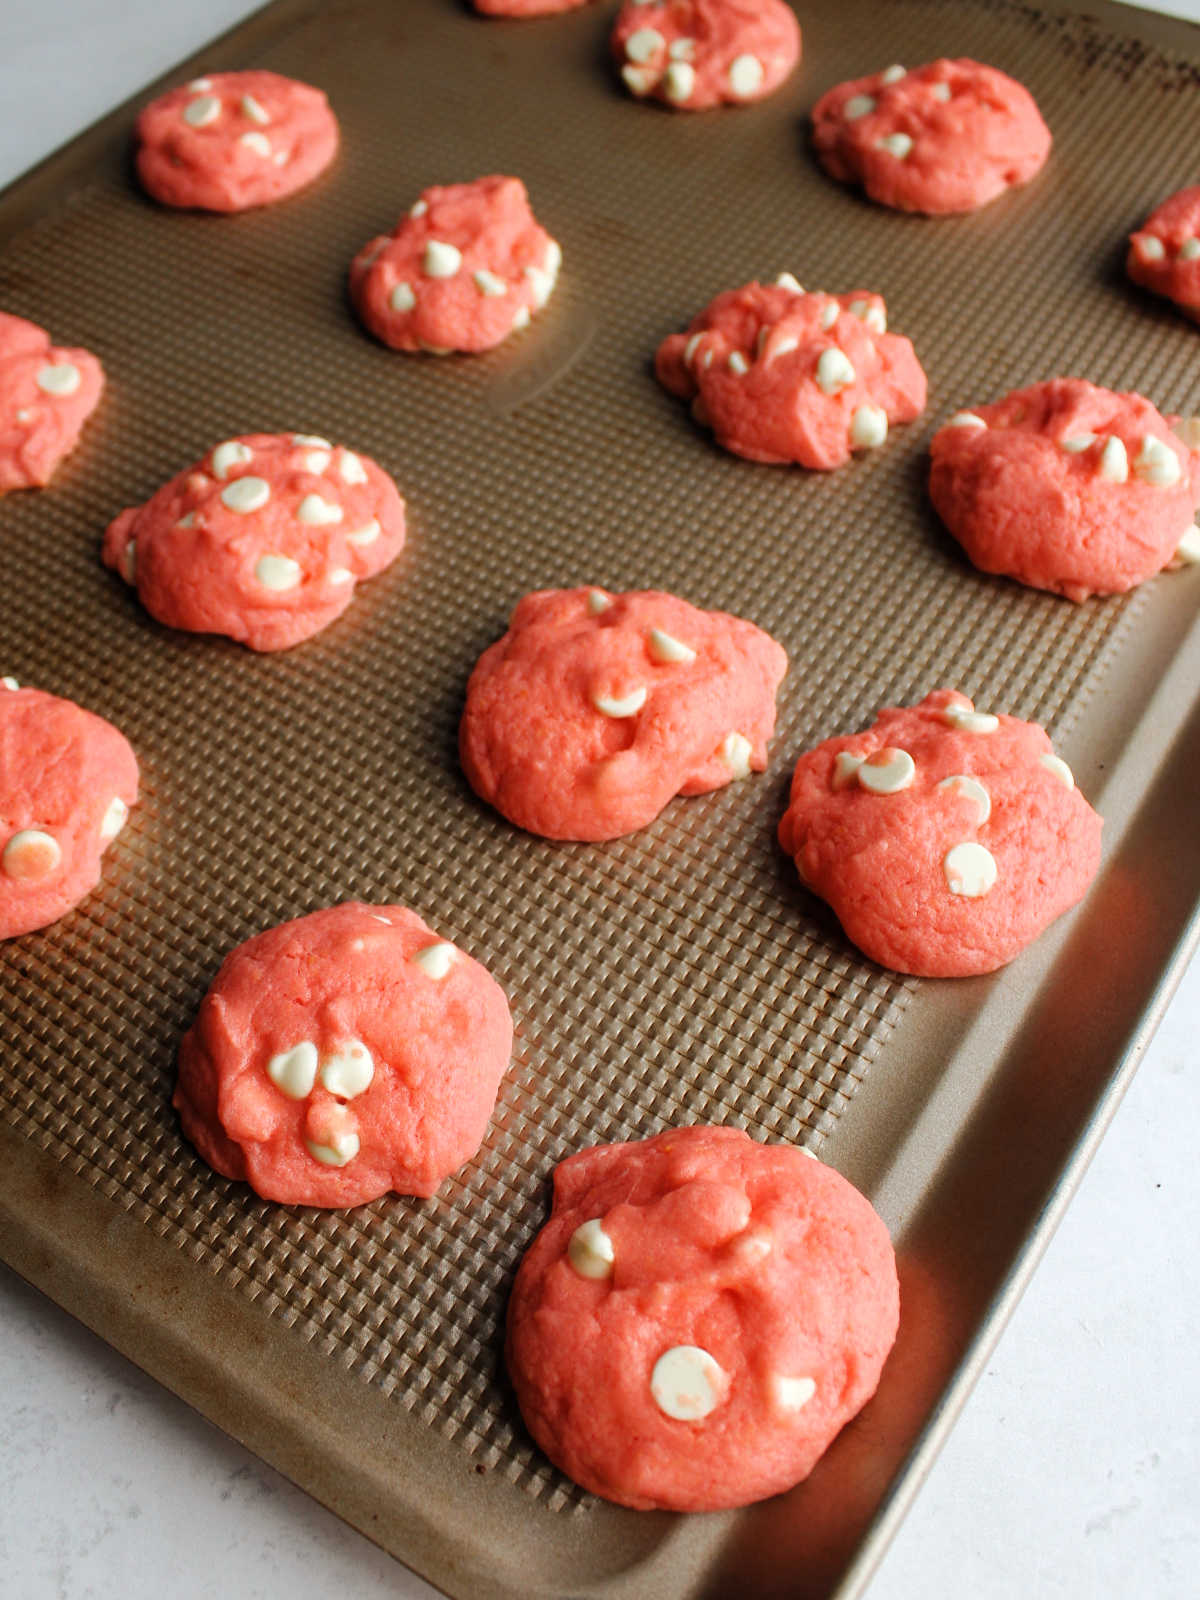 Fresh baked strawberry cookies on baking sheet.